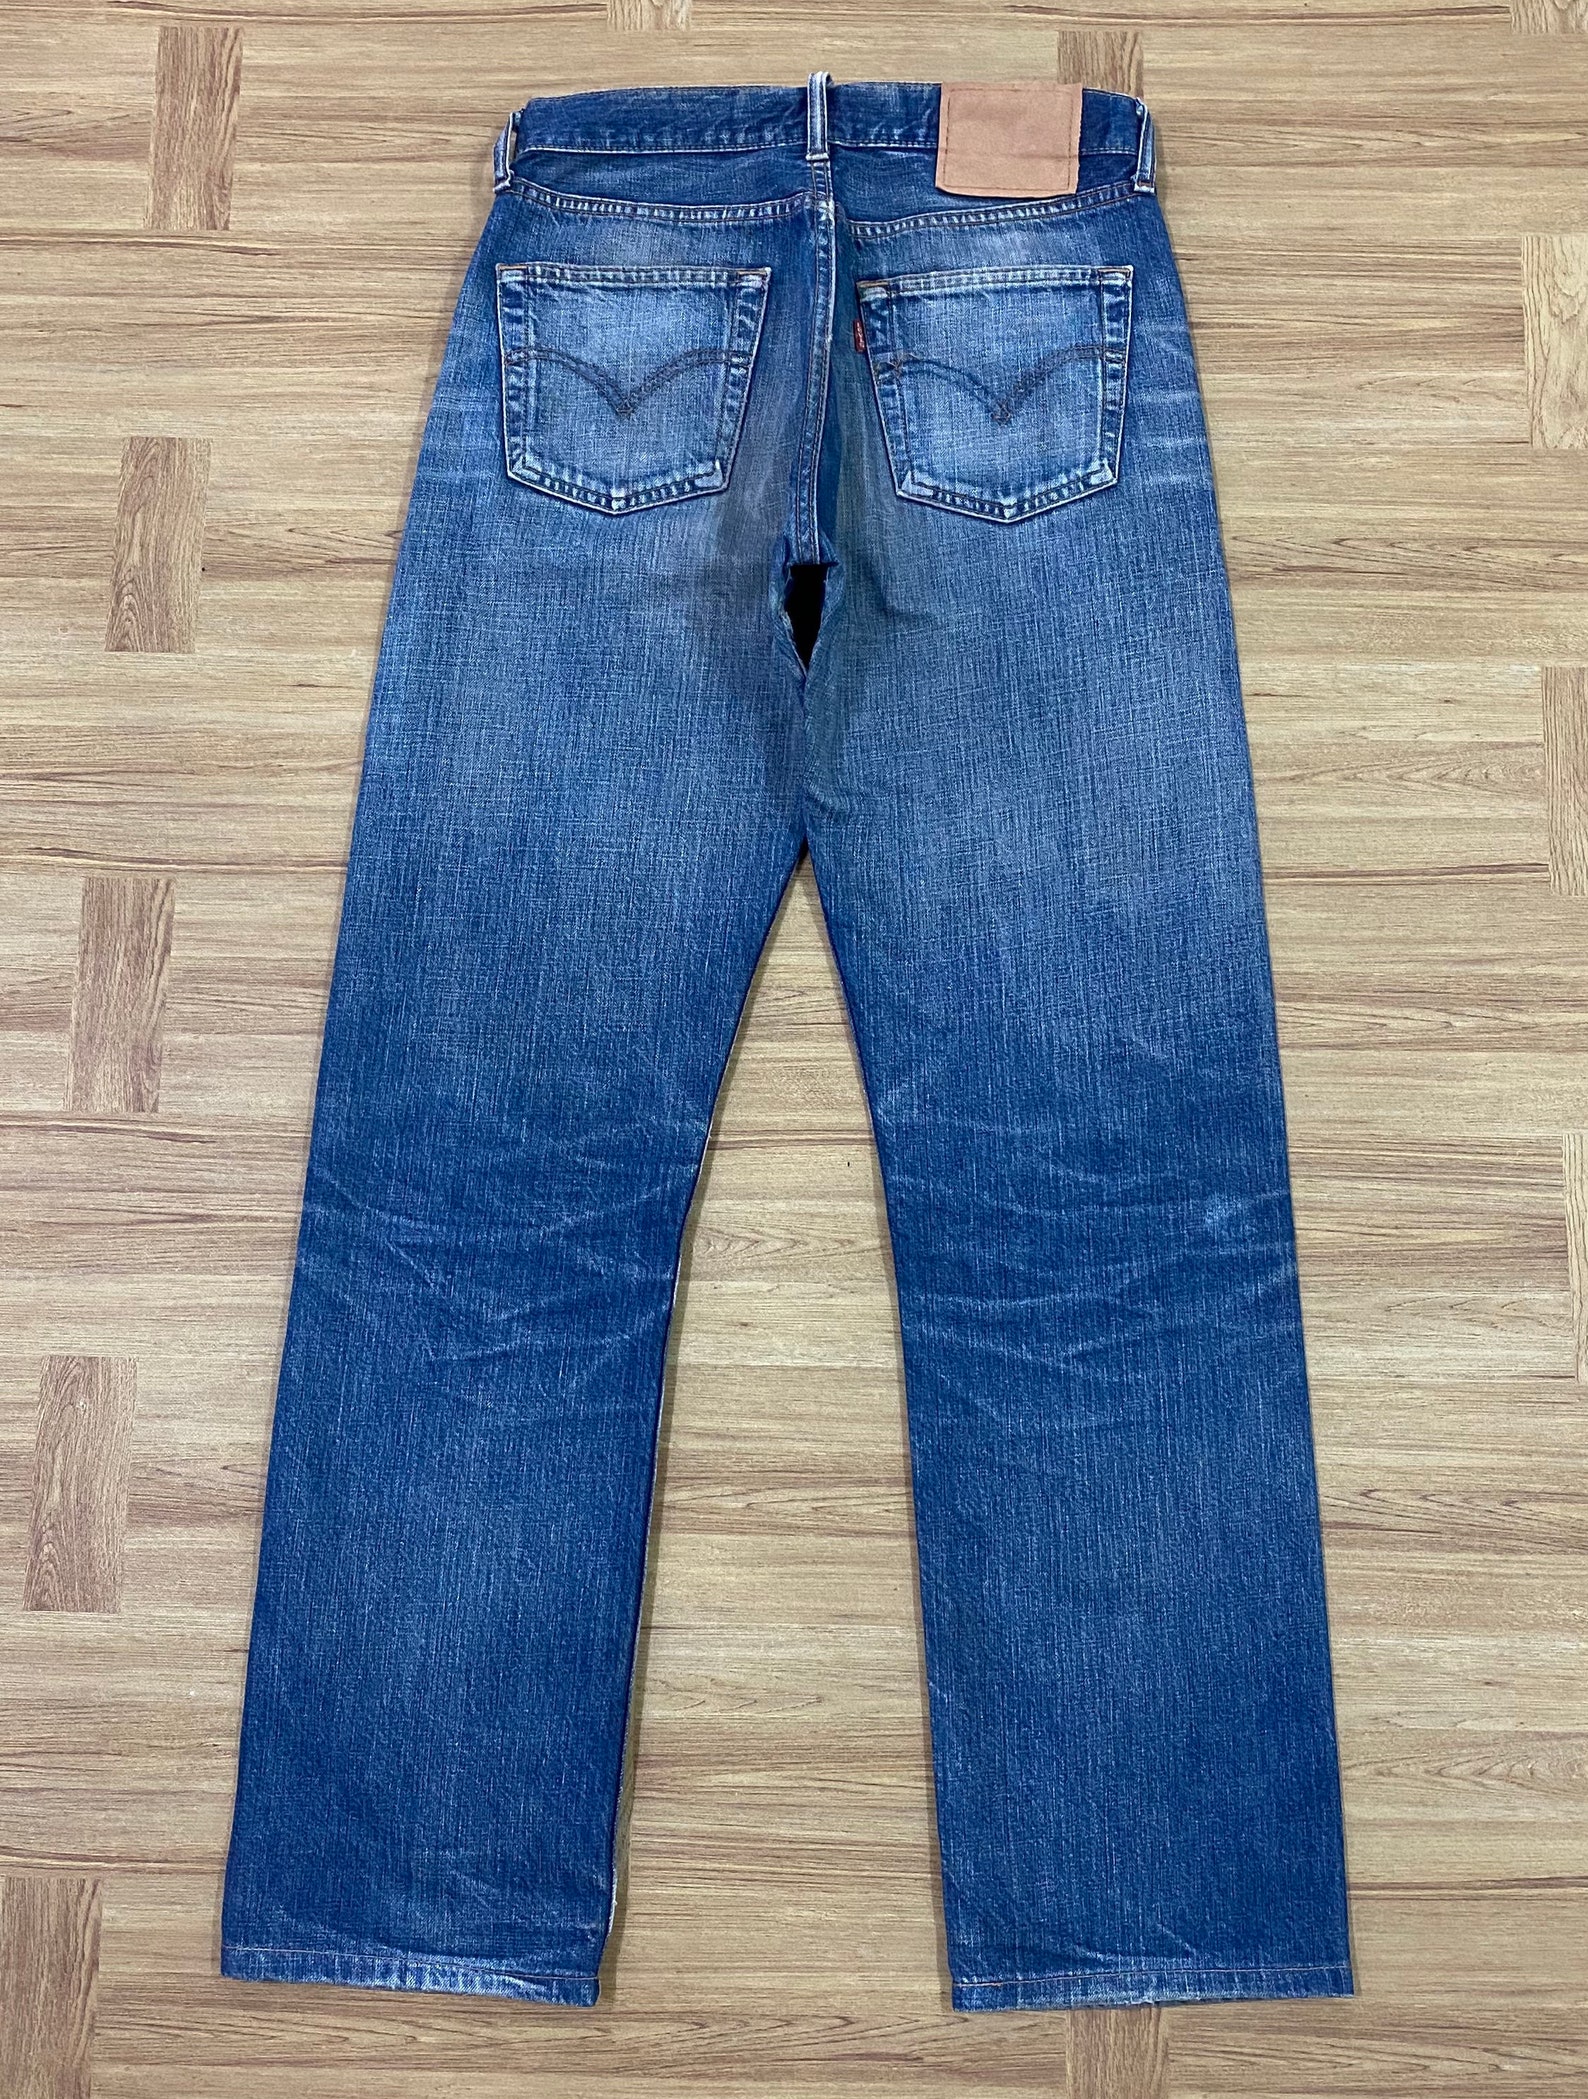 Levis 501 Jeans 90s Dark Blue Washed Jeans Unisex W28 Vintage | Etsy